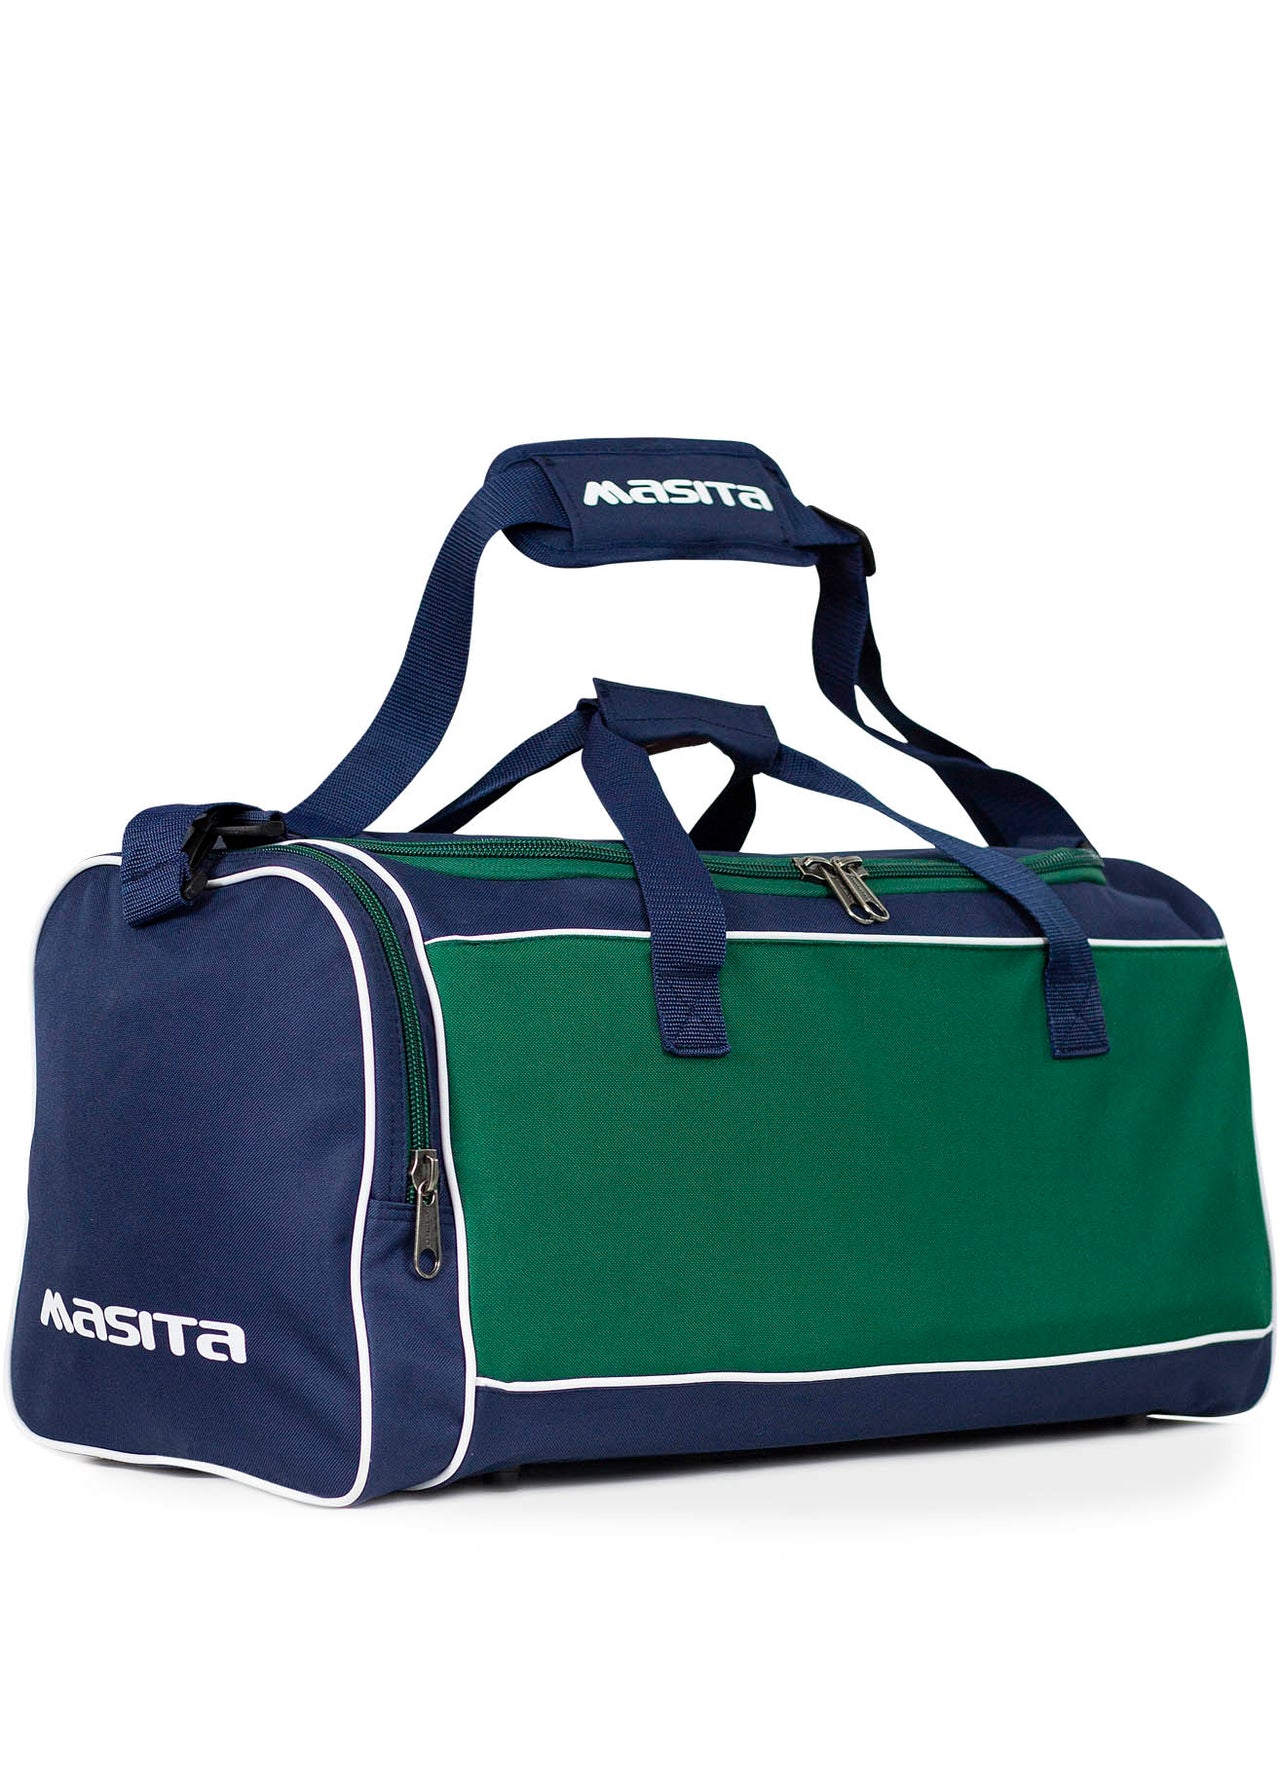 Forza Sports Bag Green/Navy/White